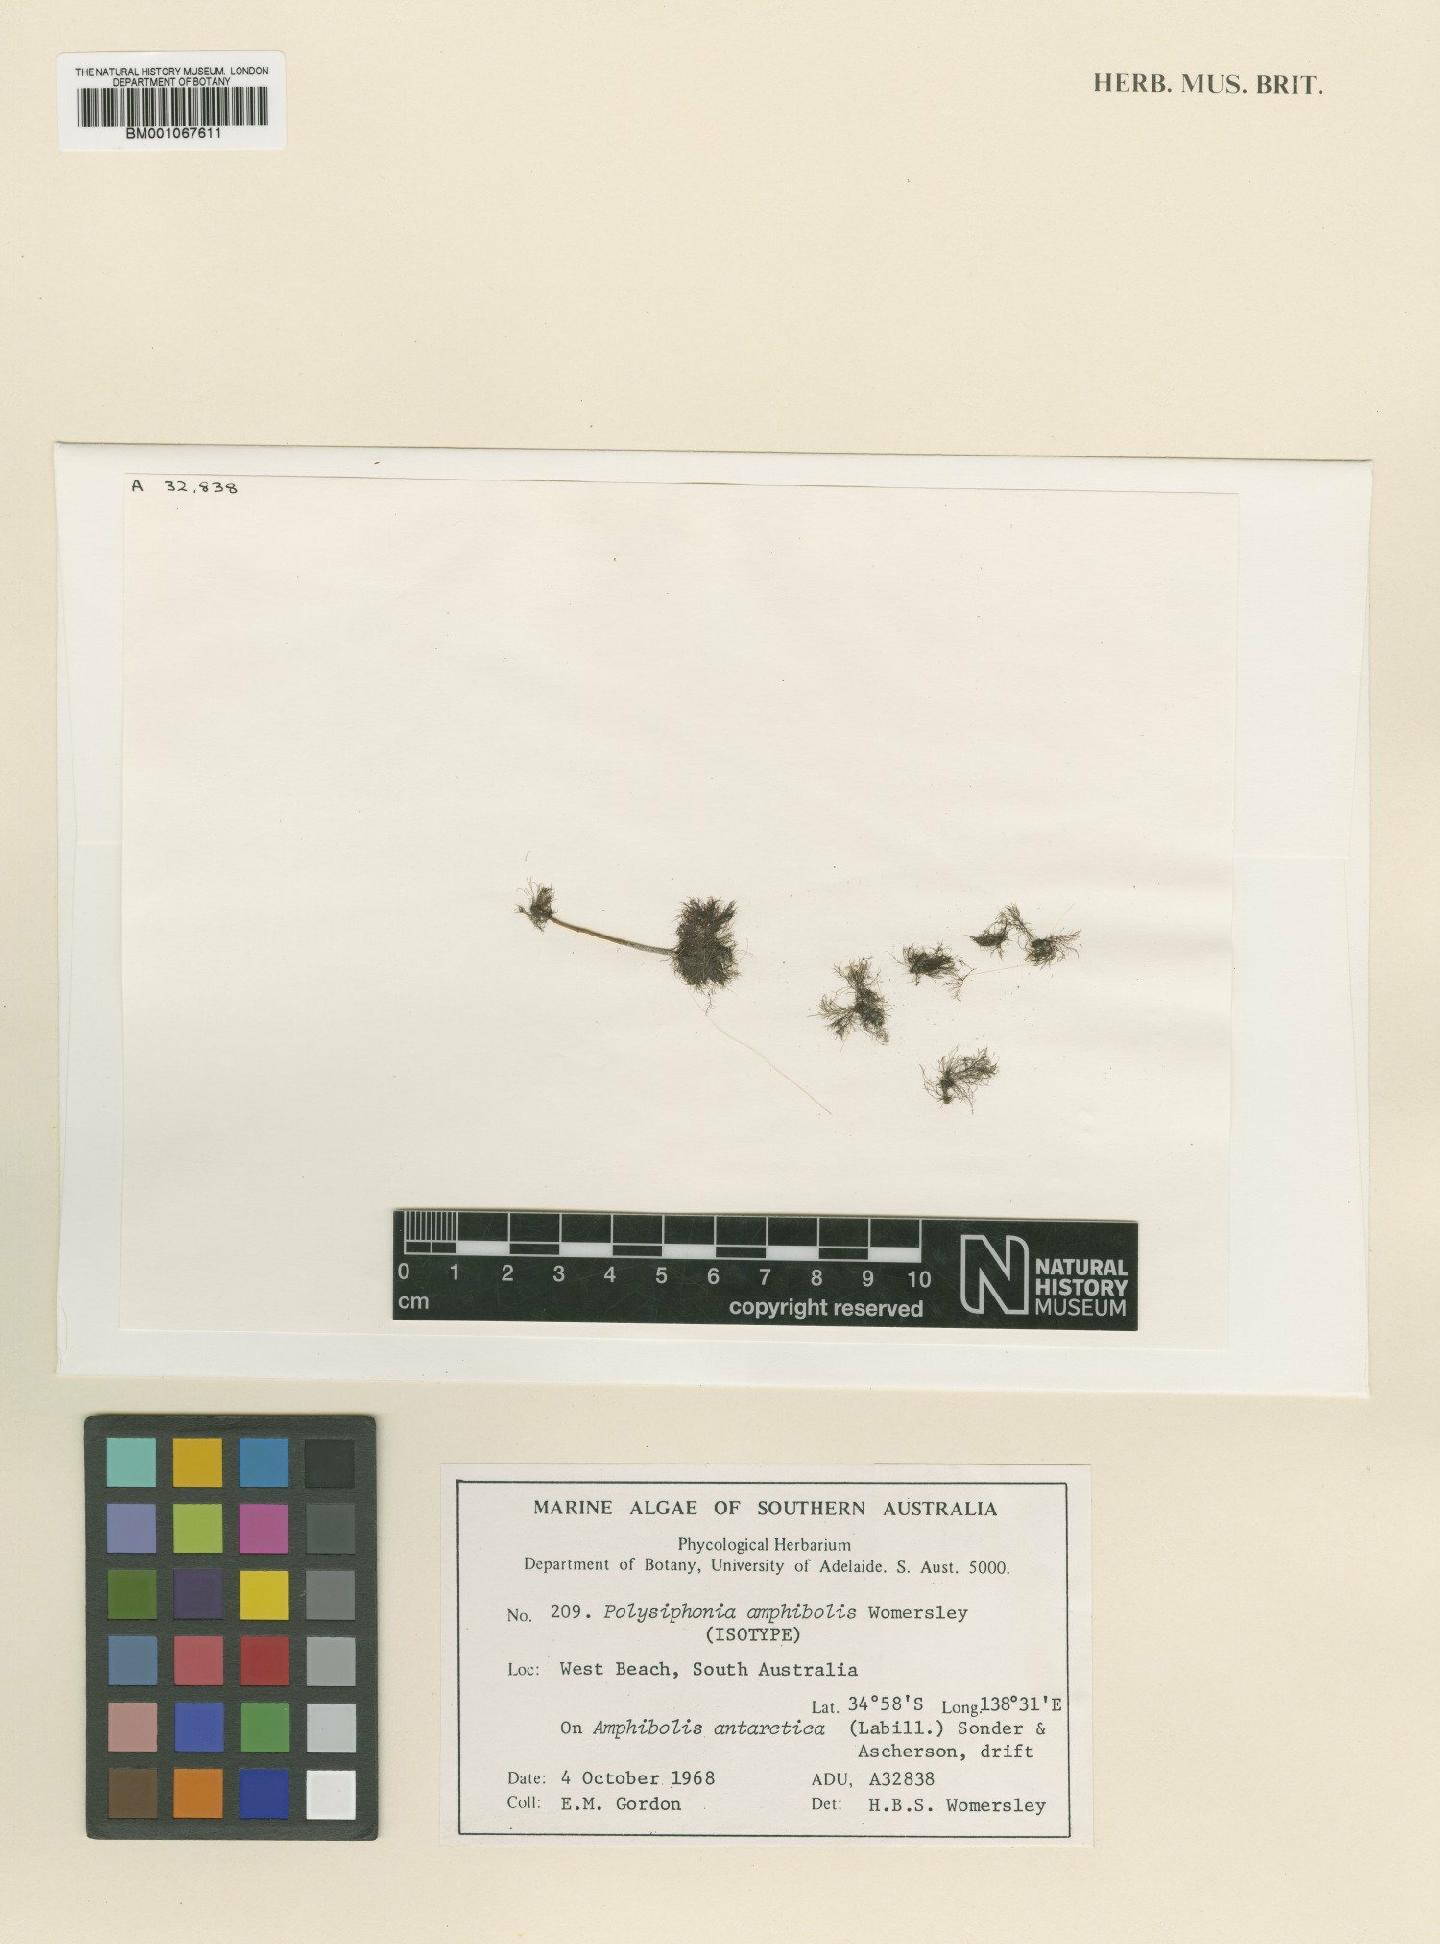 To NHMUK collection (Polysiphonia amphibolis Womersley; Isotype; NHMUK:ecatalogue:2303594)